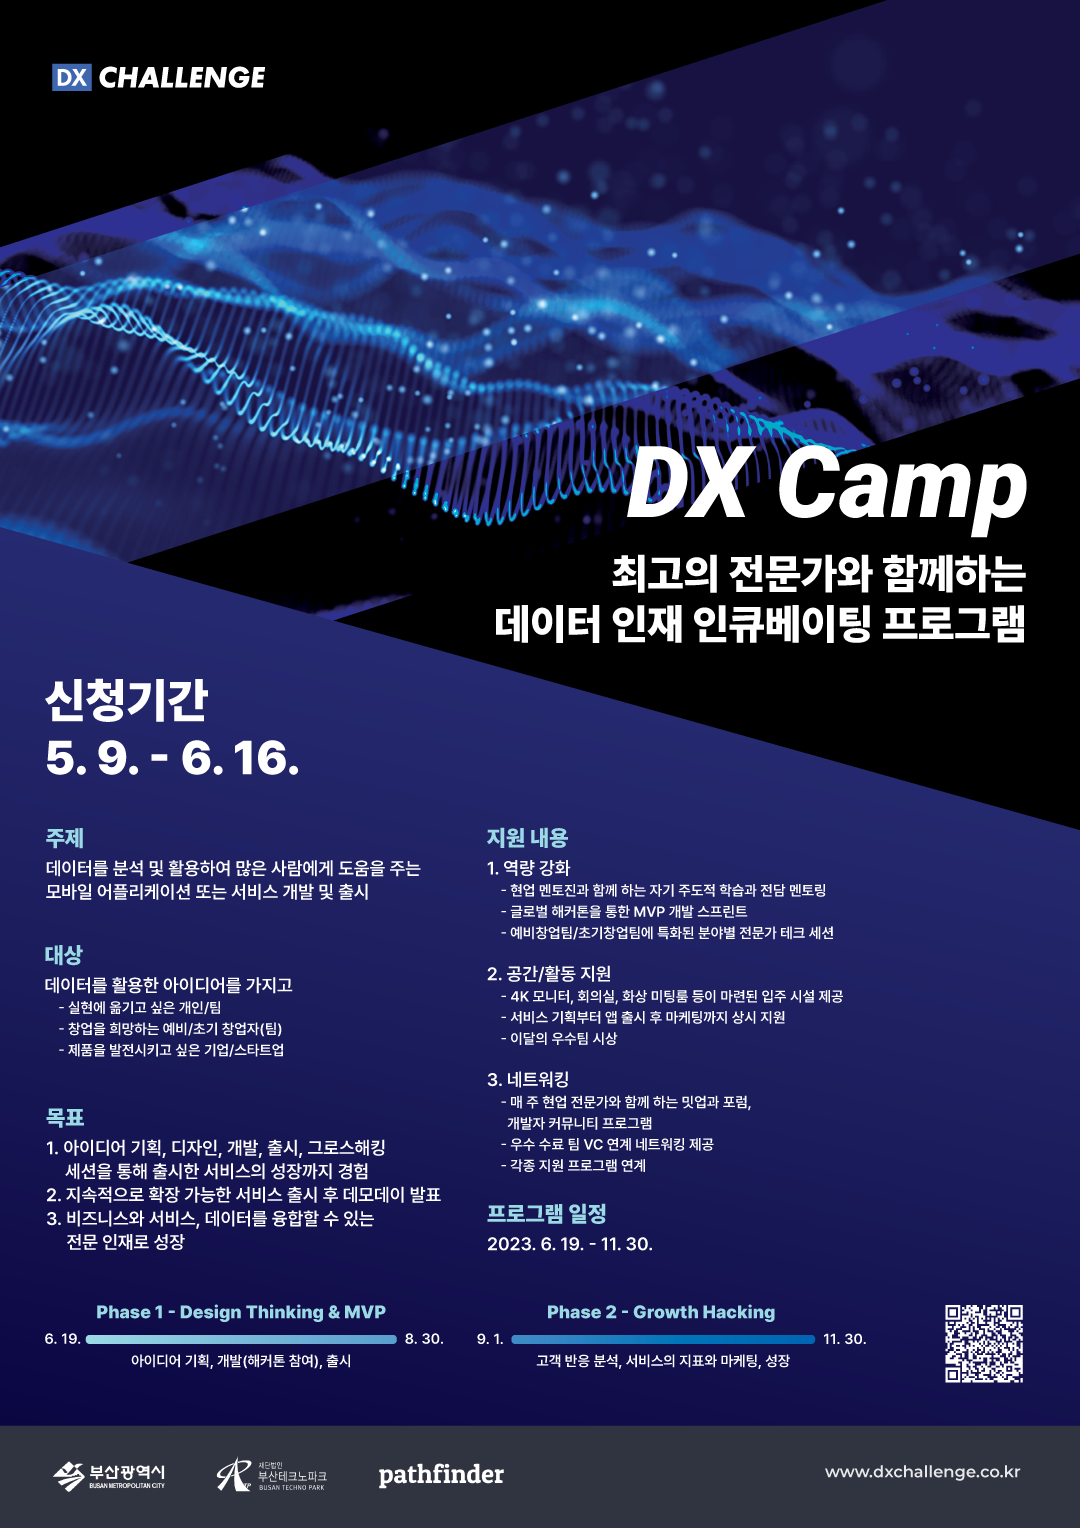 DX CAMP 최고의 전문가와 함께하는 데이터 인재 인큐베이팅 프로그램